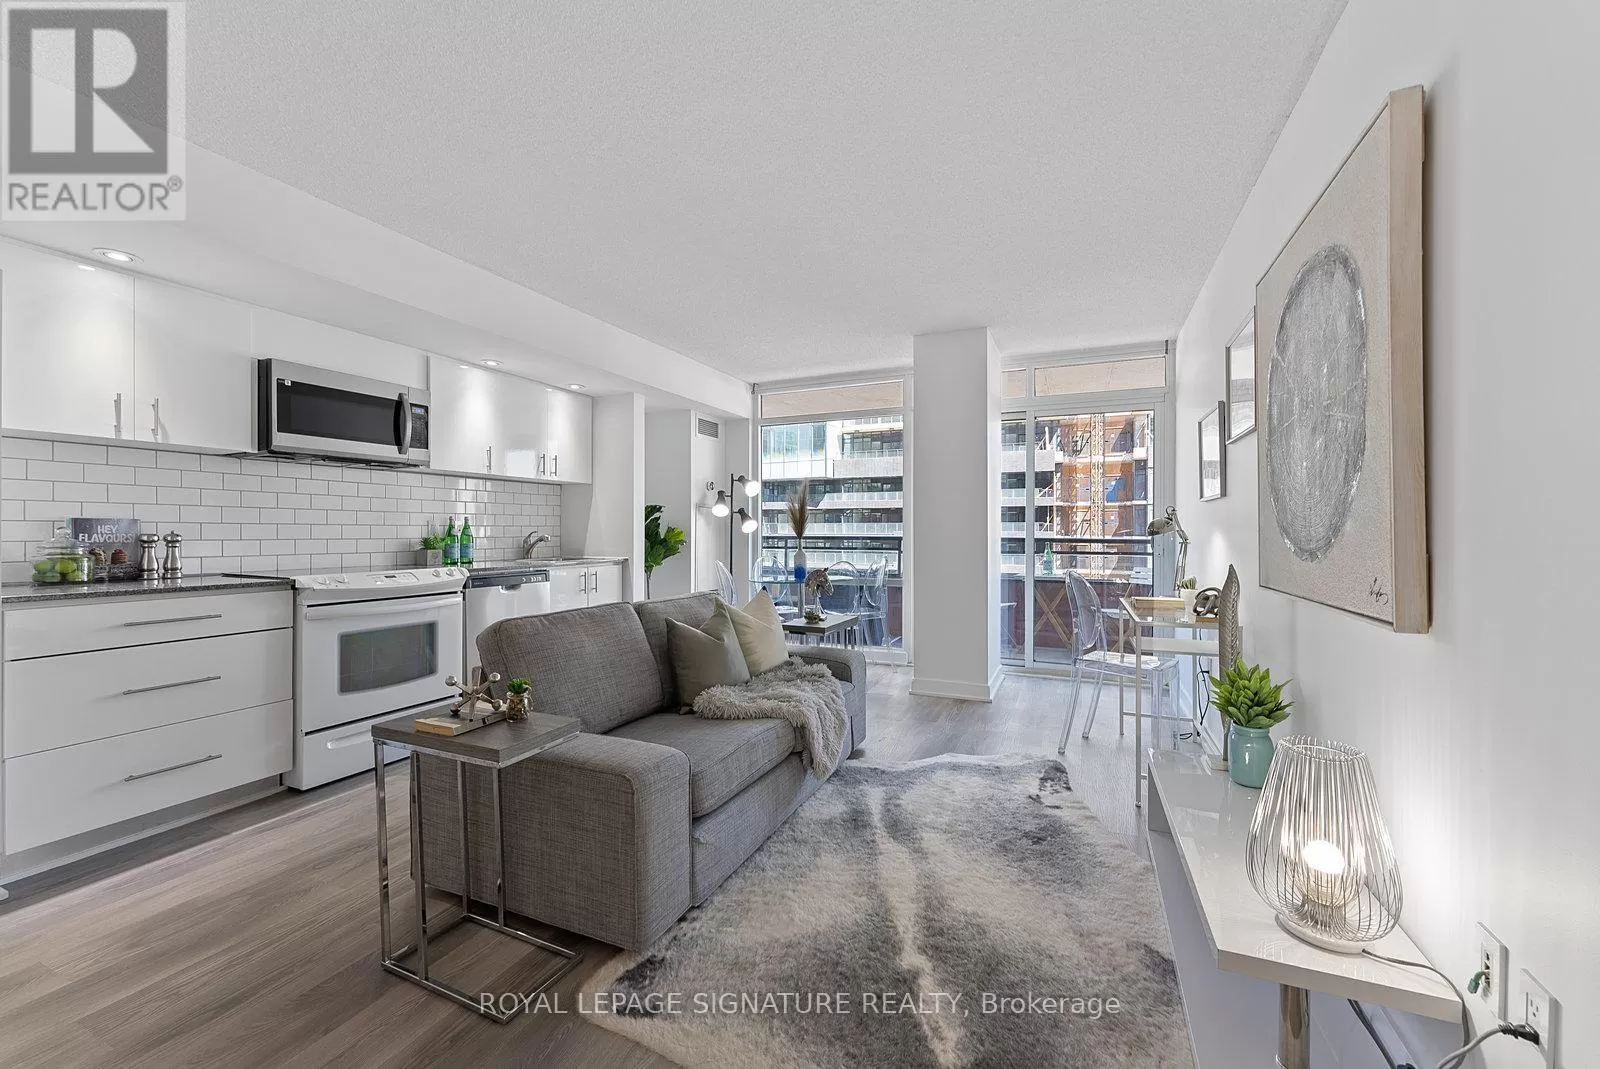 Apartment for rent: 917 - 4k Spadina Avenue, Toronto, Ontario M5V 3Y9